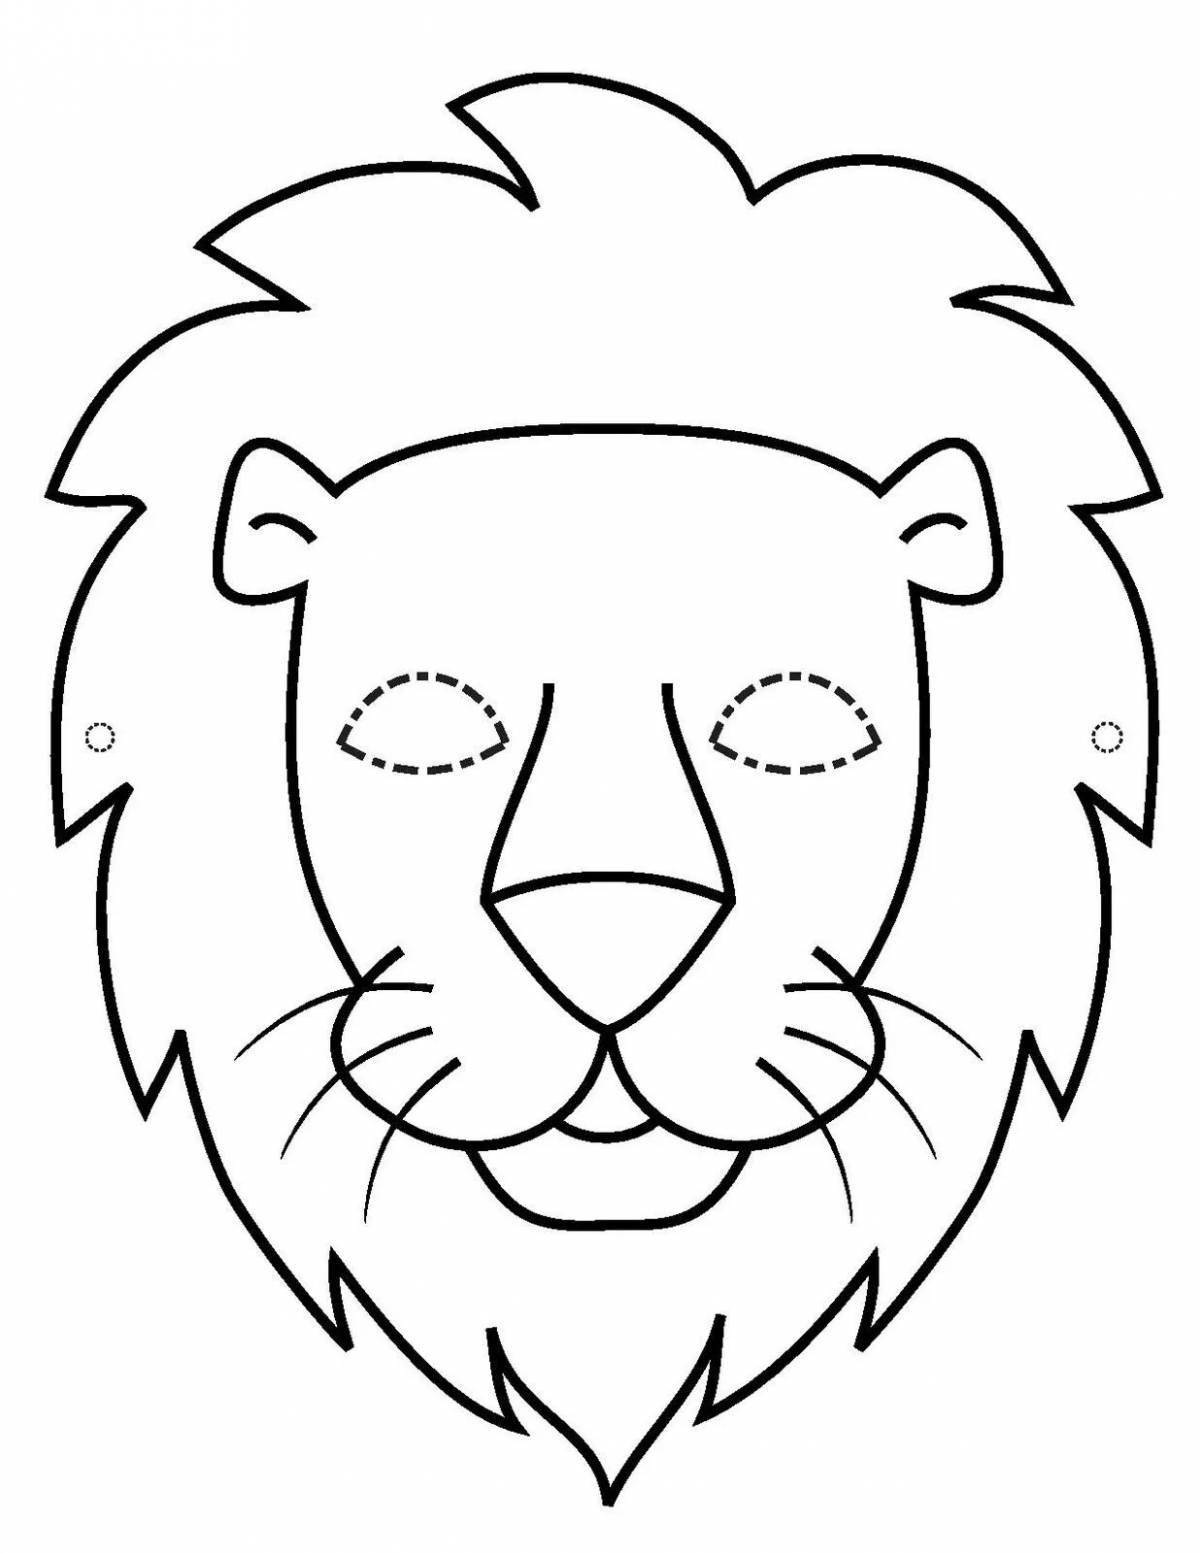 Раскраска украшенная голова льва